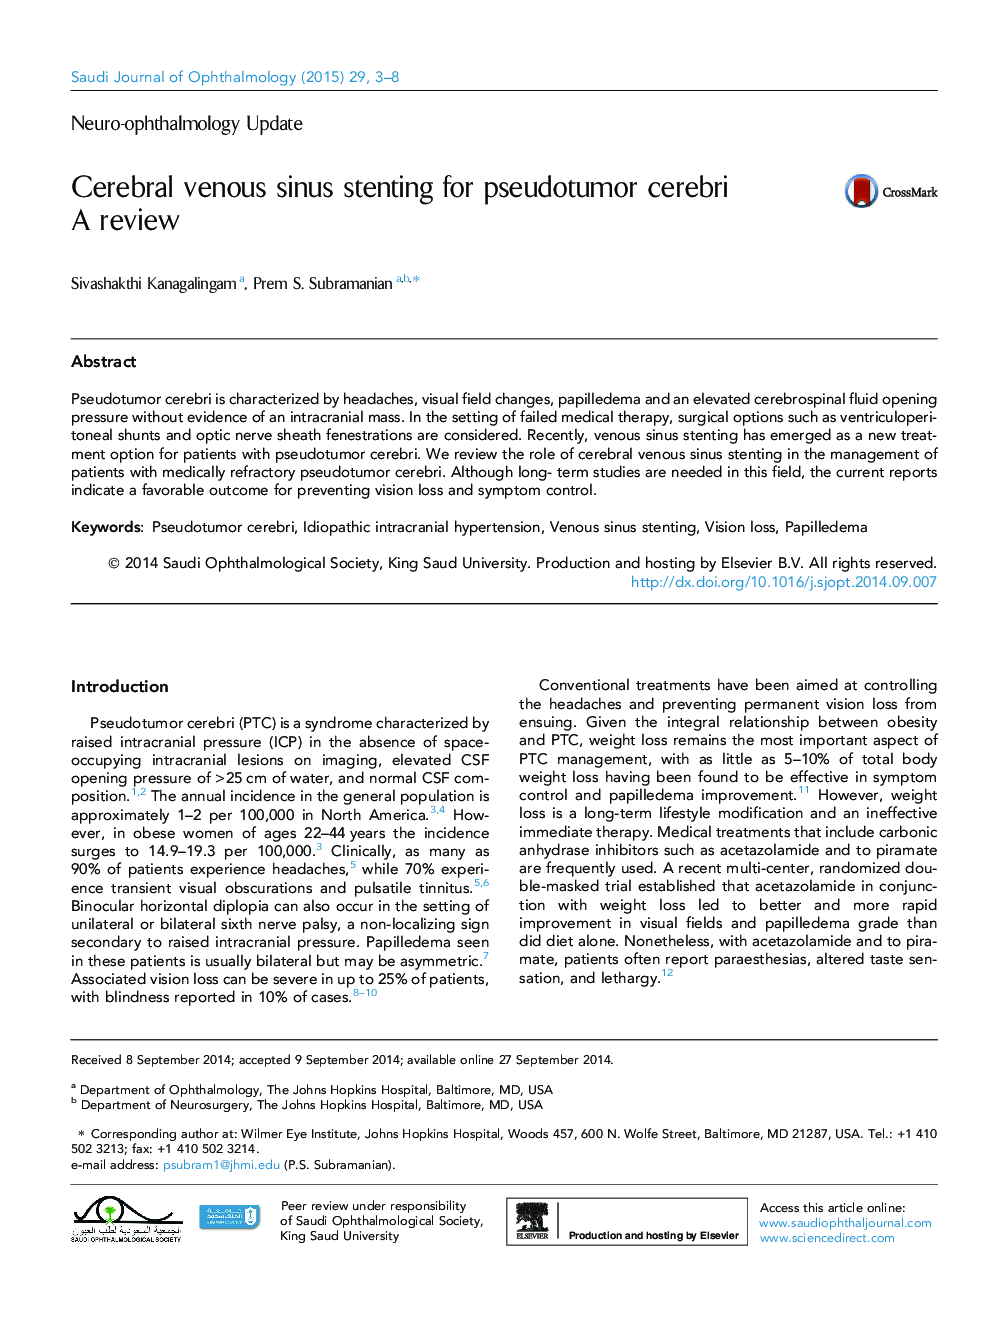 Cerebral venous sinus stenting for pseudotumor cerebri: A review 